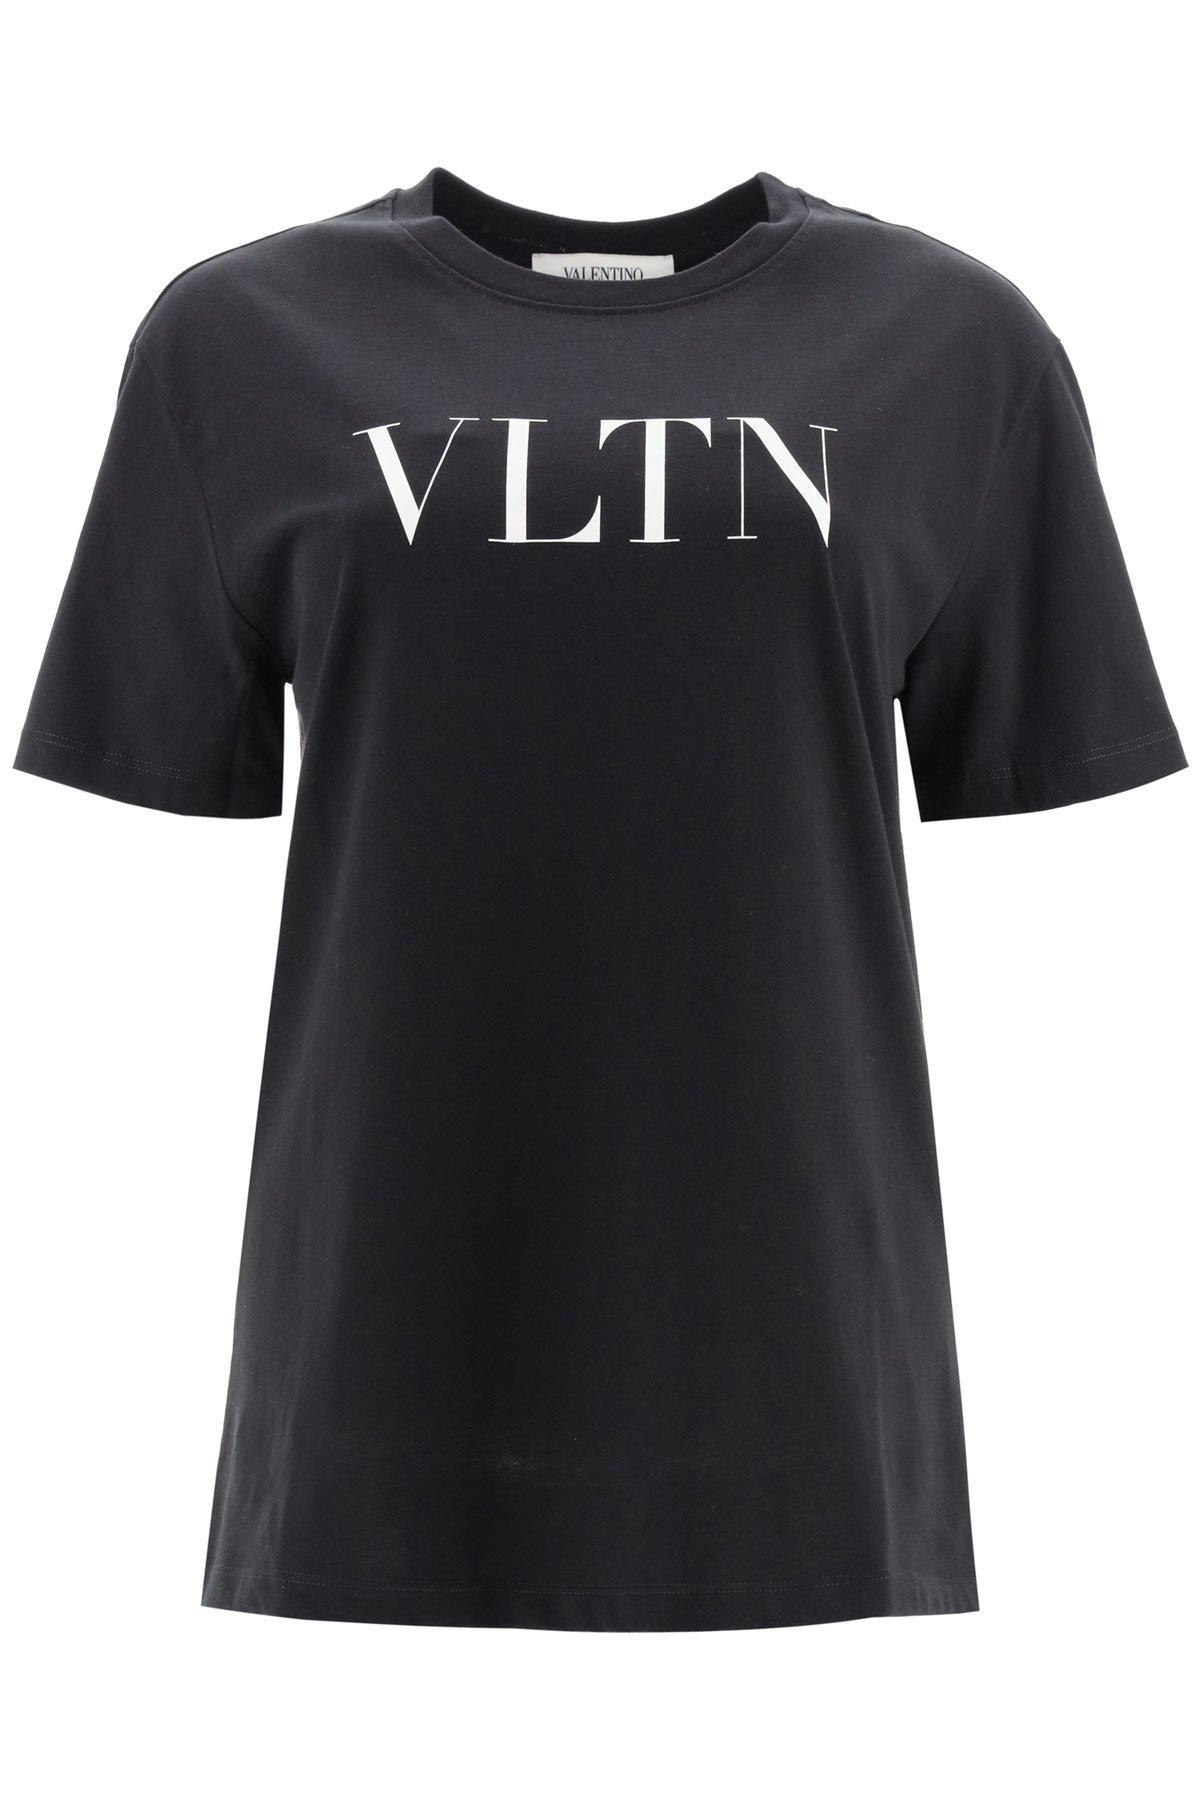 Valentino Cotton Vltn Logo Shirt in Black - Lyst